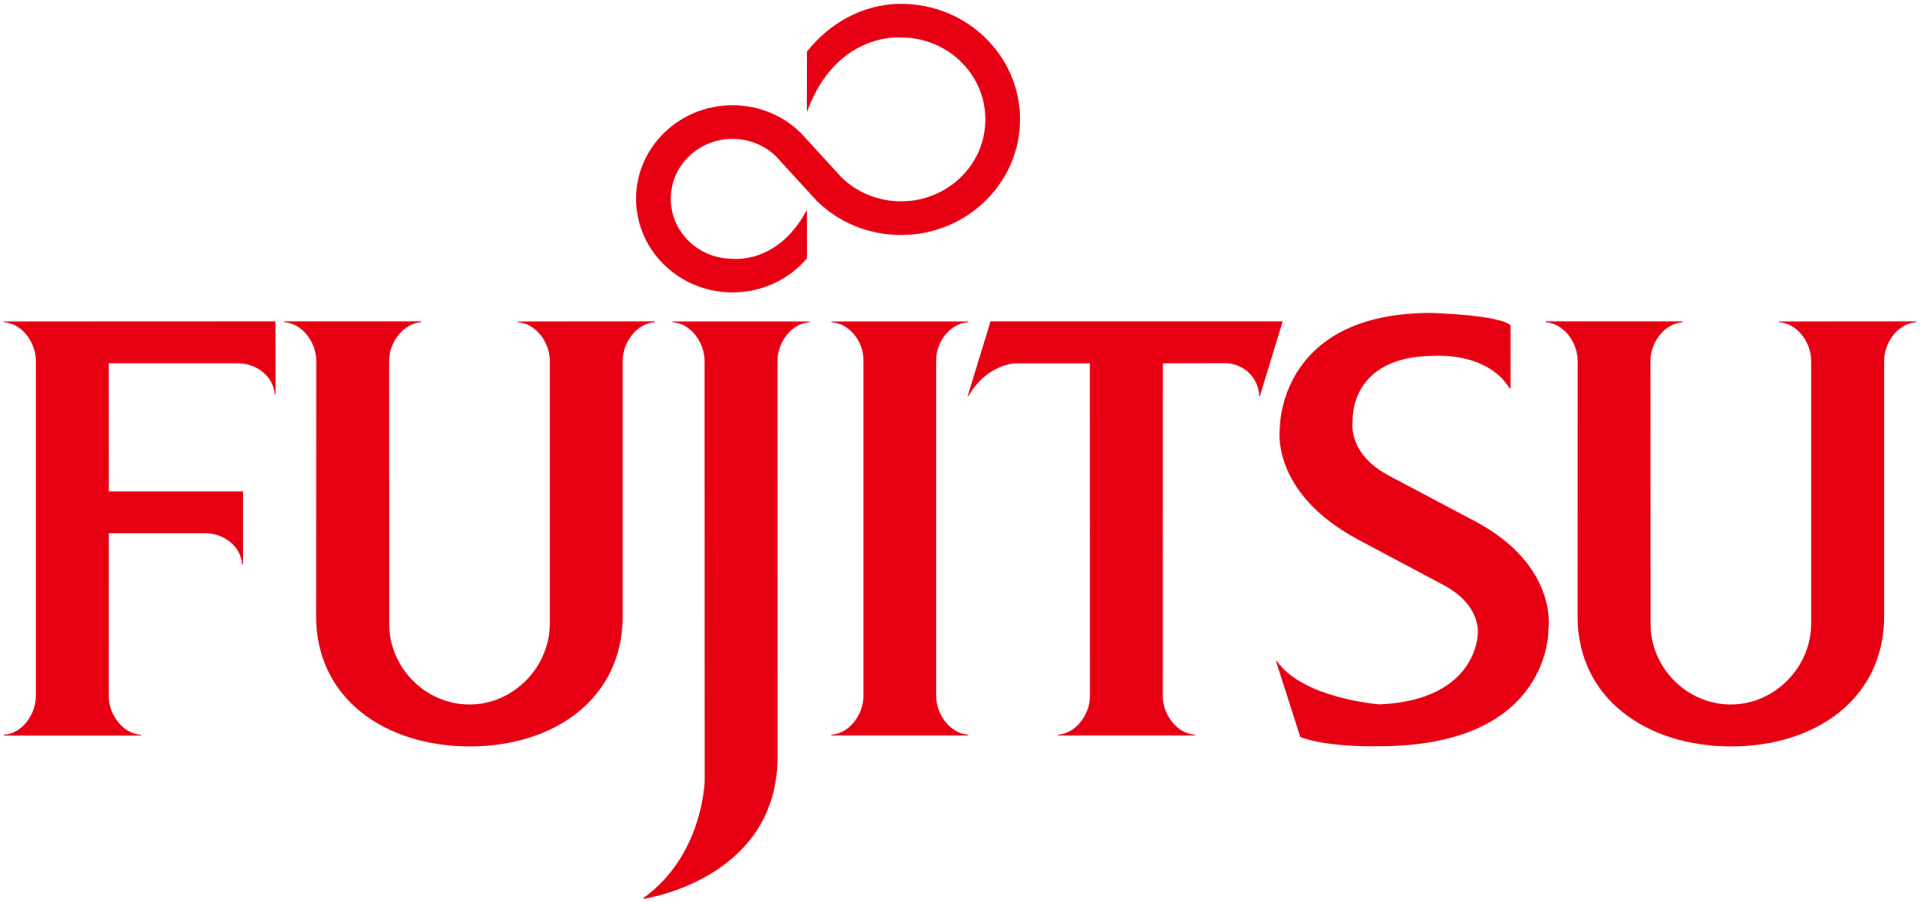 Fujitsu logo written in Red Color